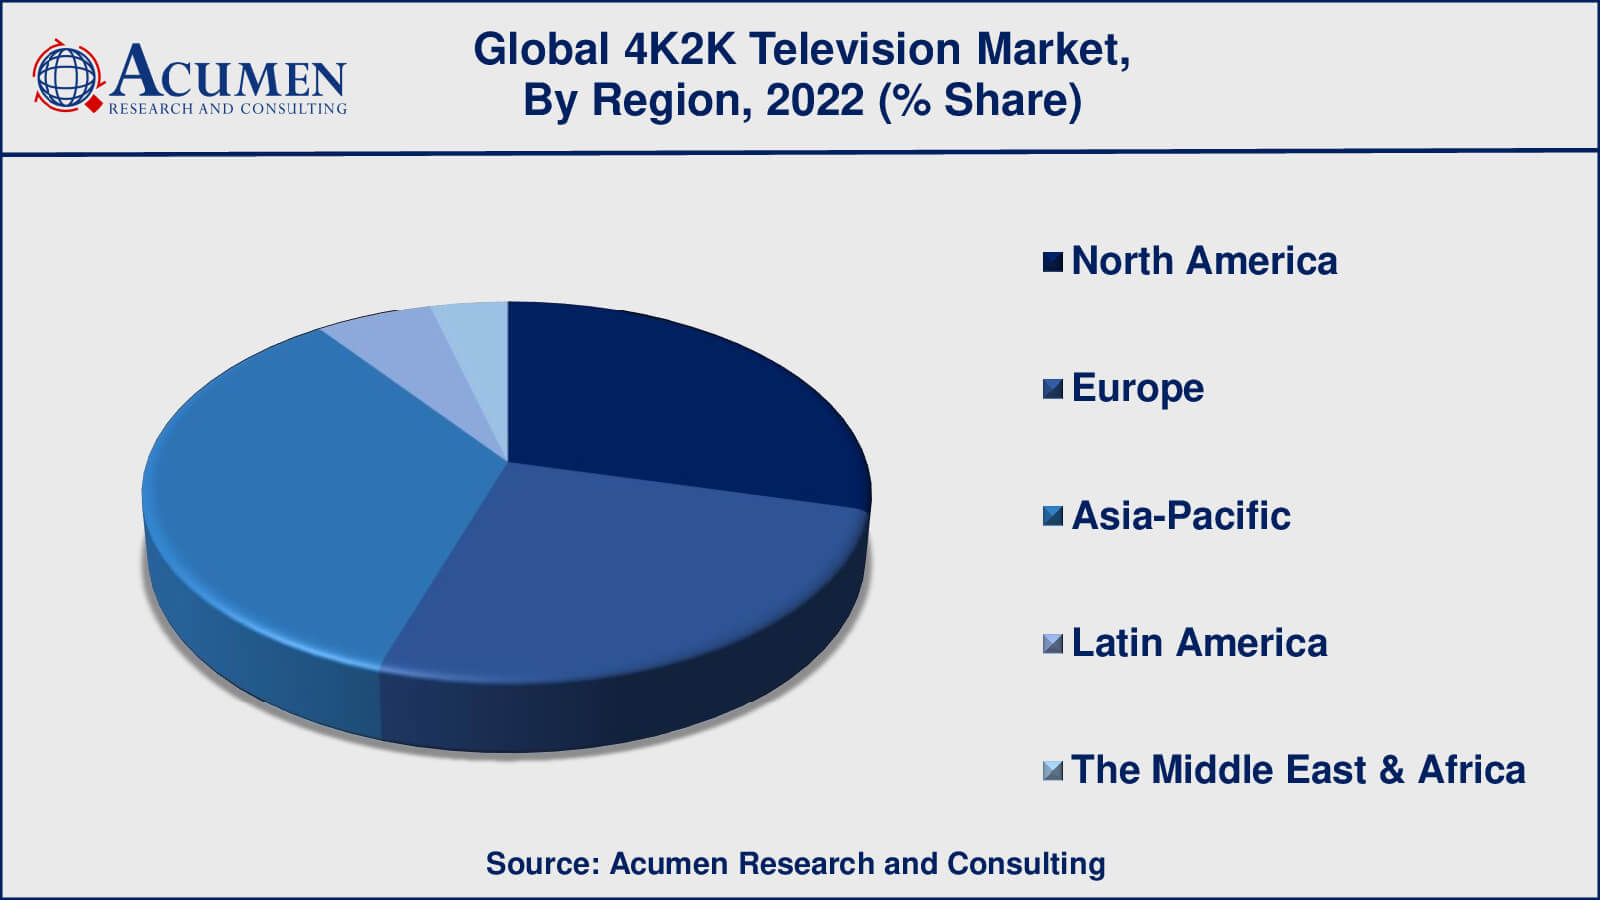 4K2K Television Market Drivers